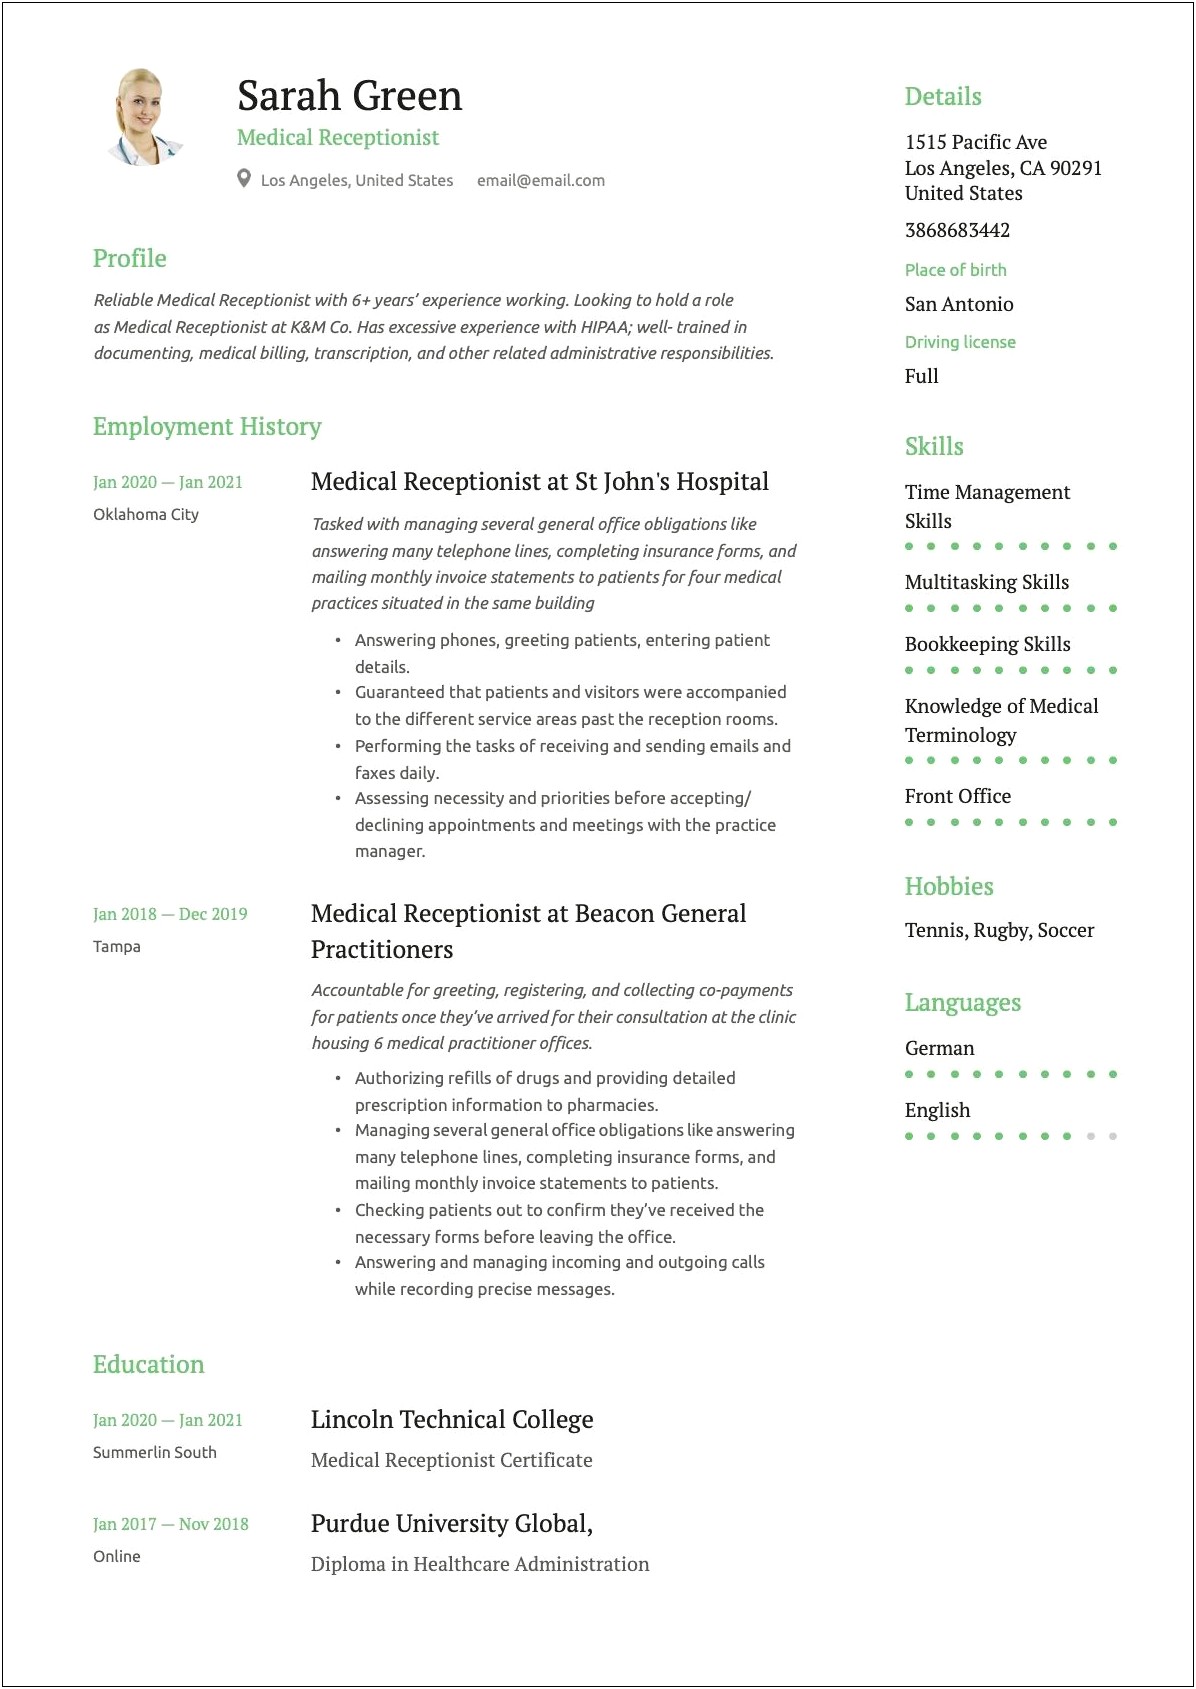 Sample Resume For Hospital Front Desk